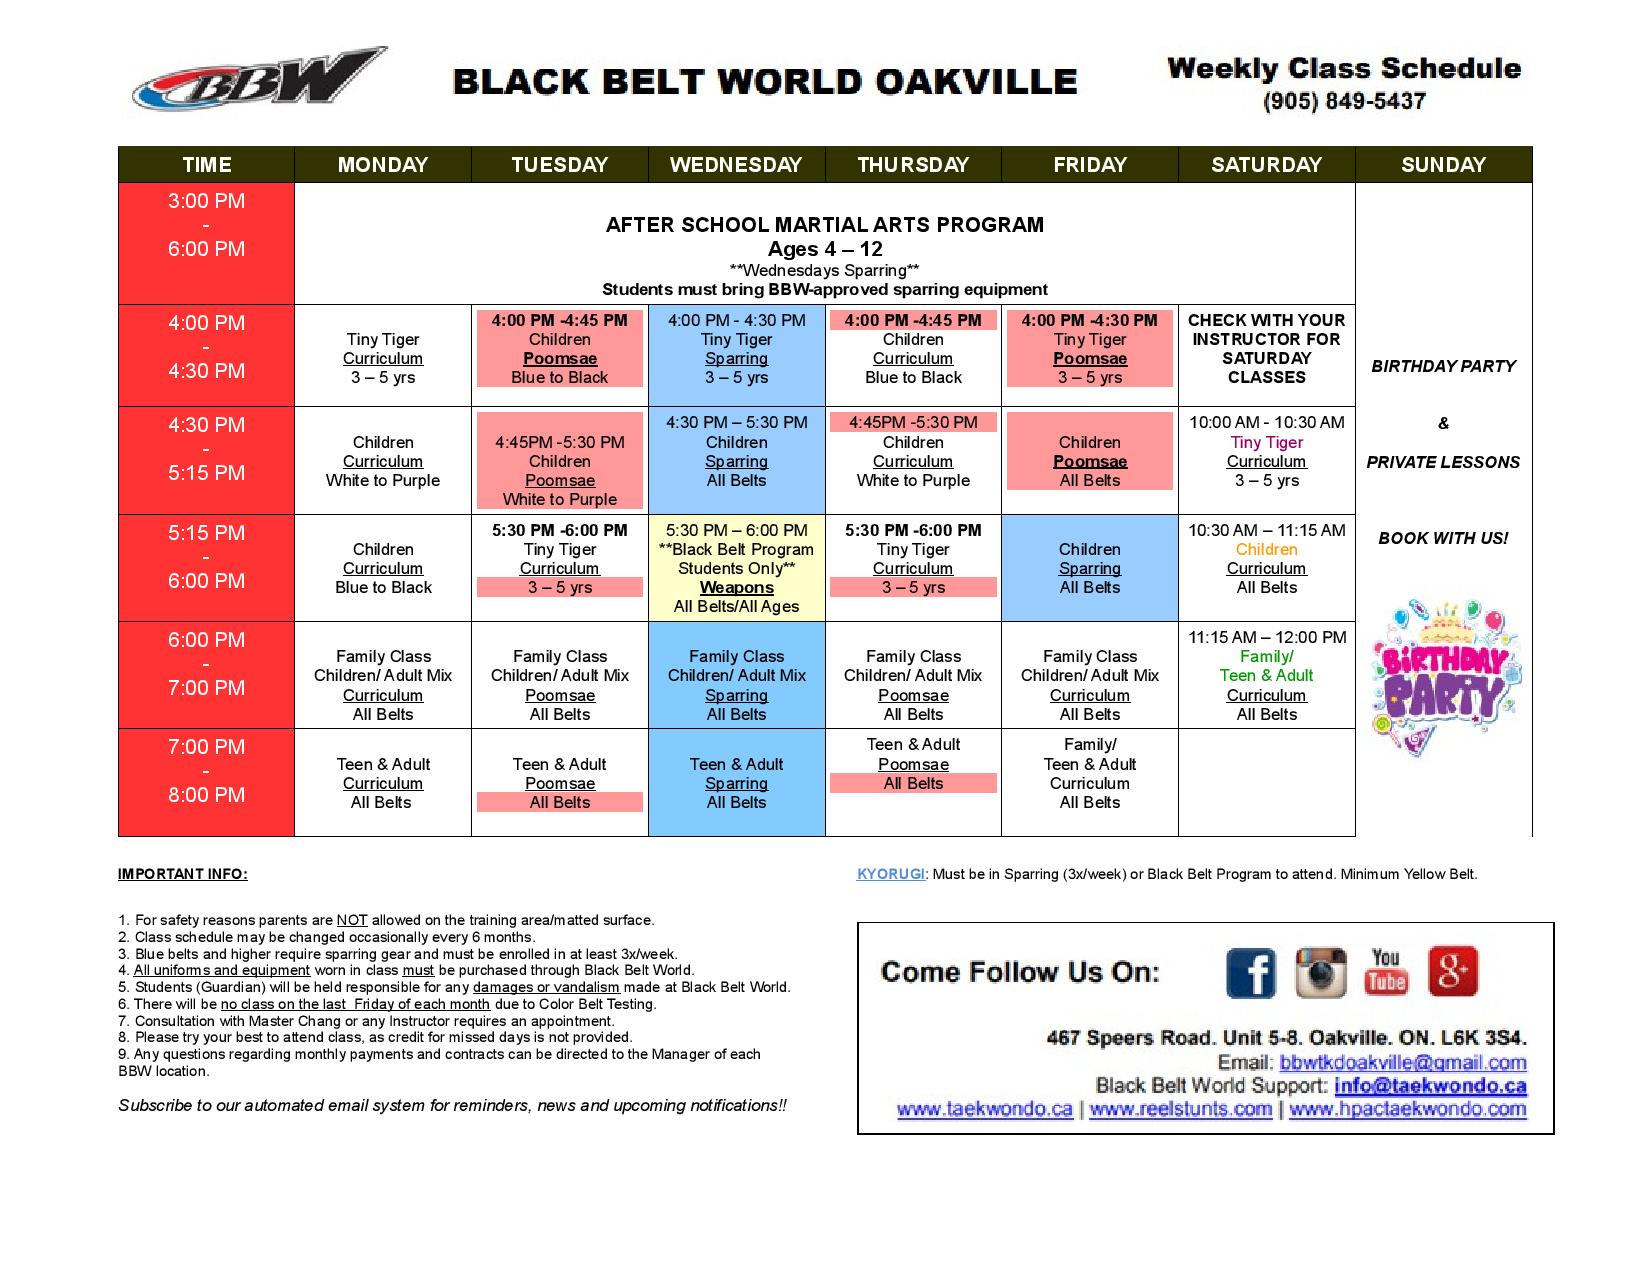 oakville class schedule